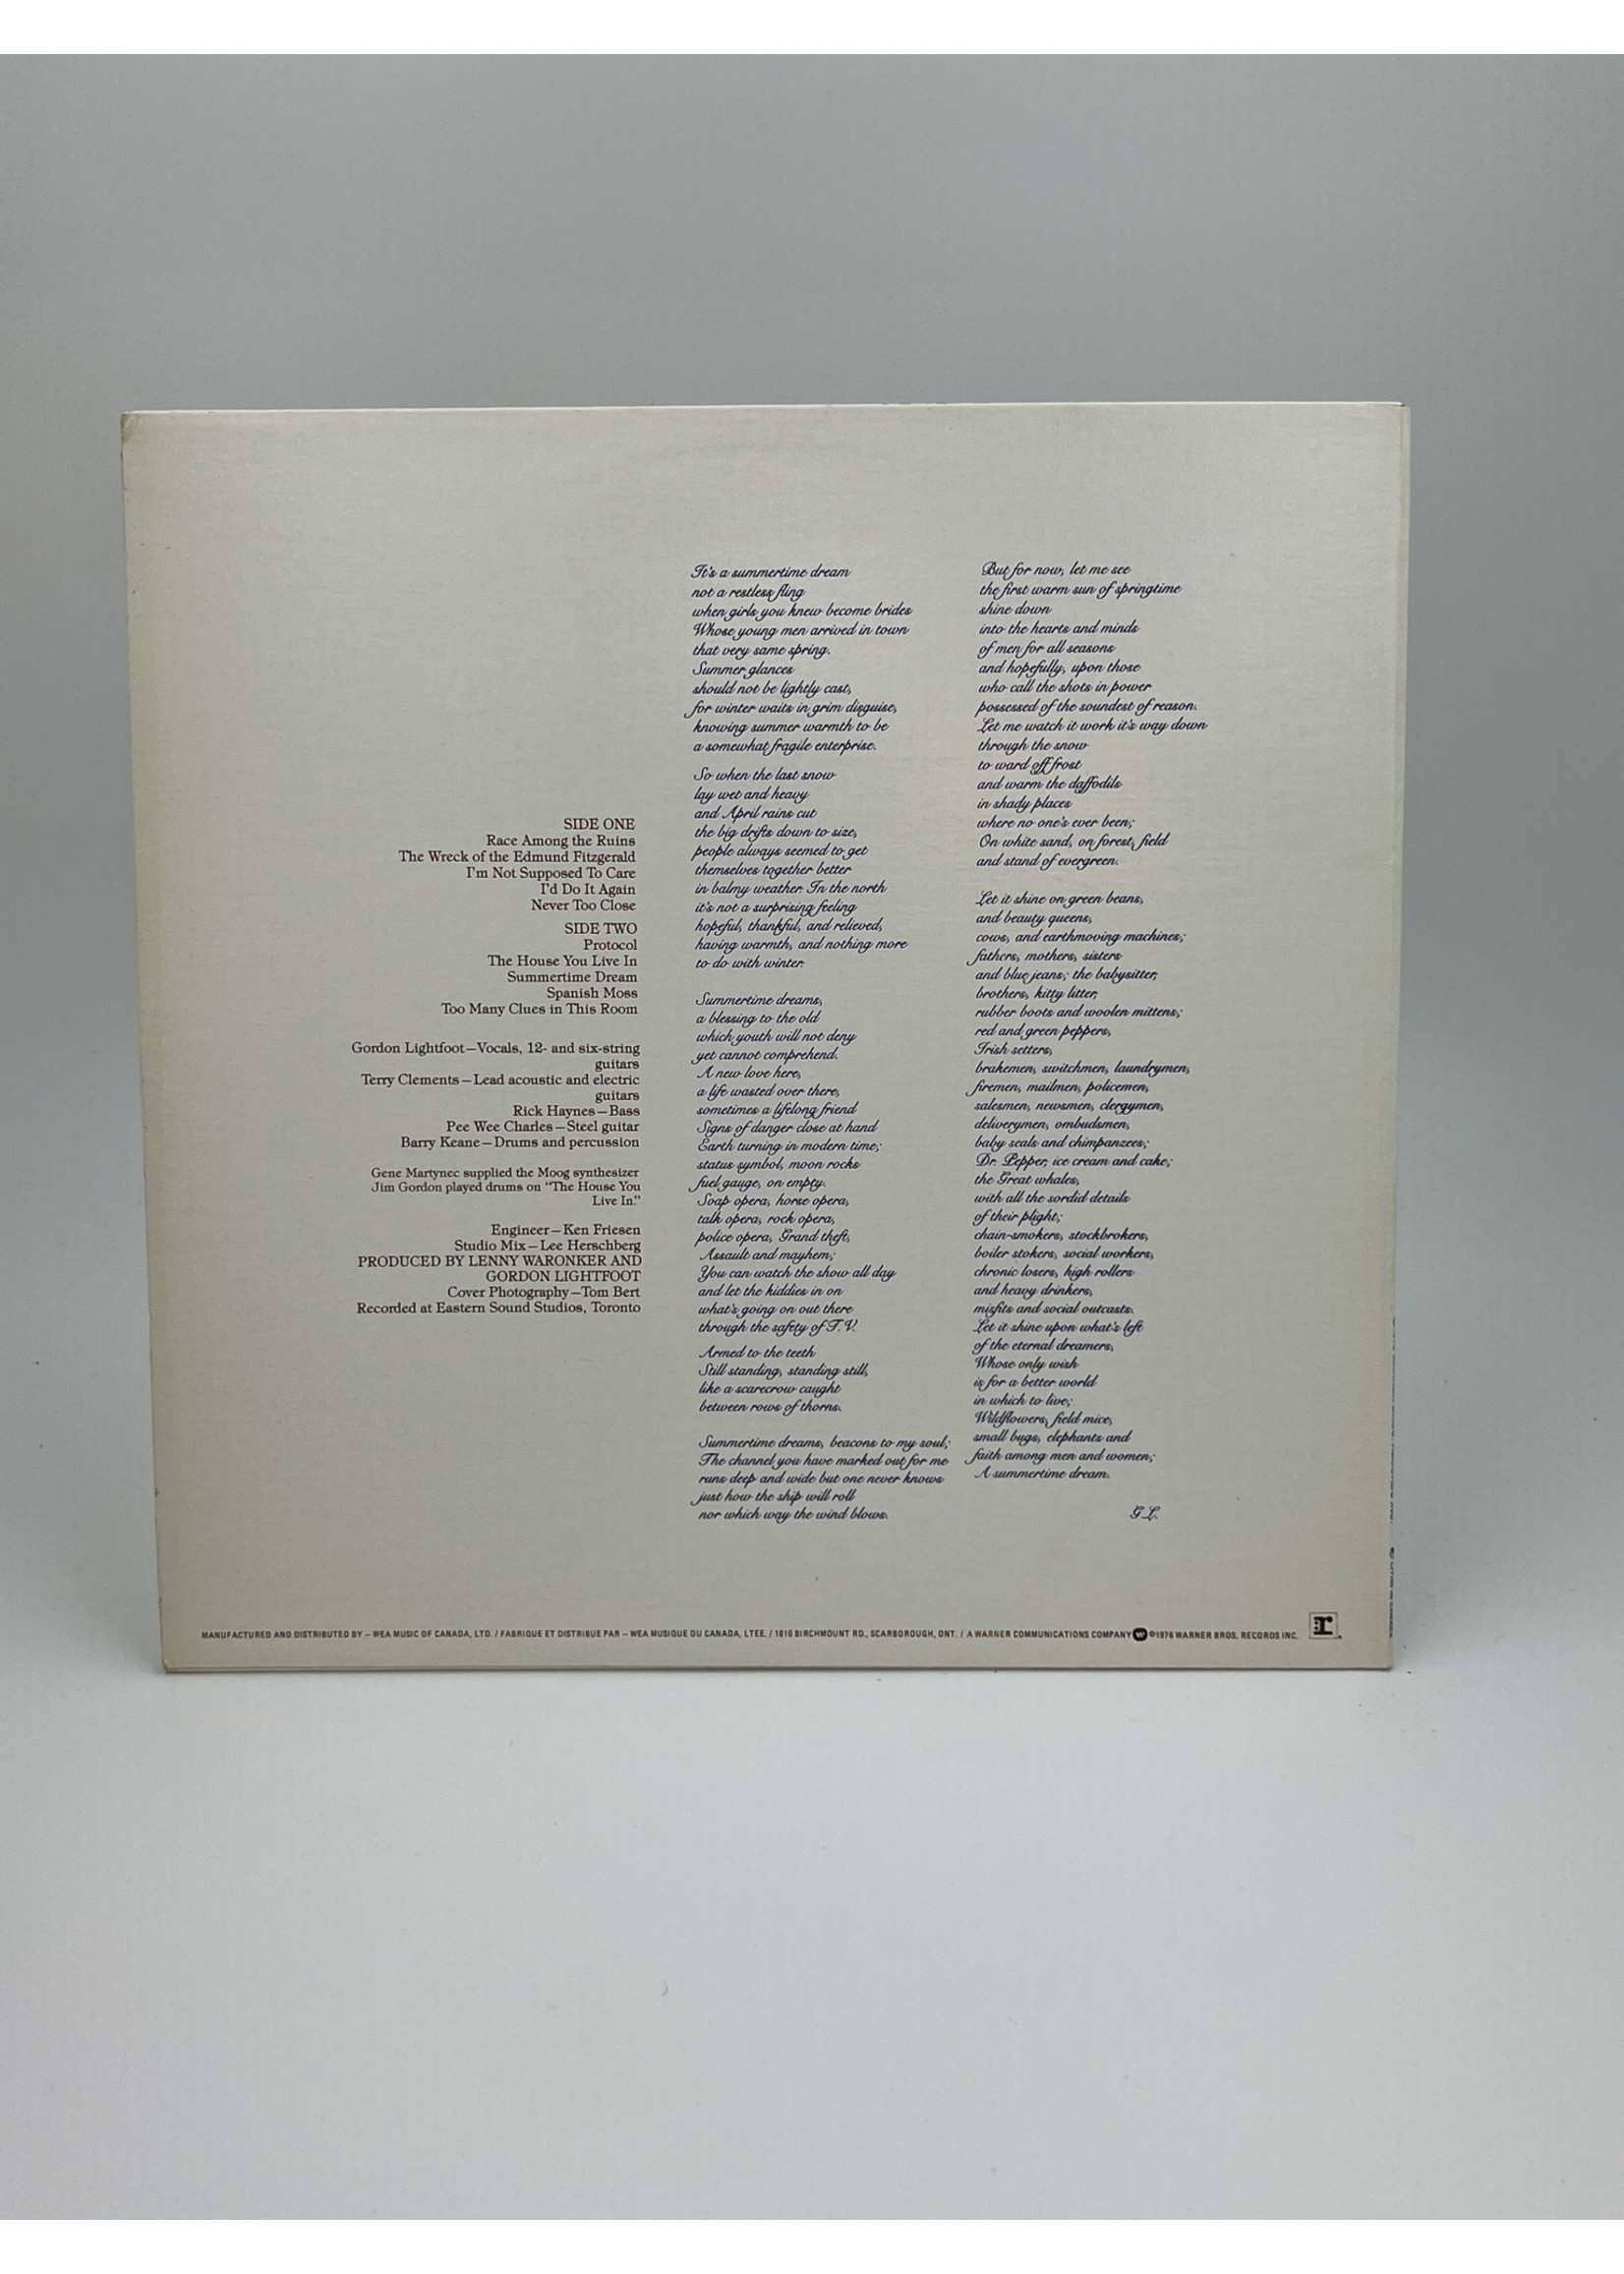 LP Gordon Lightfoot Summertime Dream LP Record